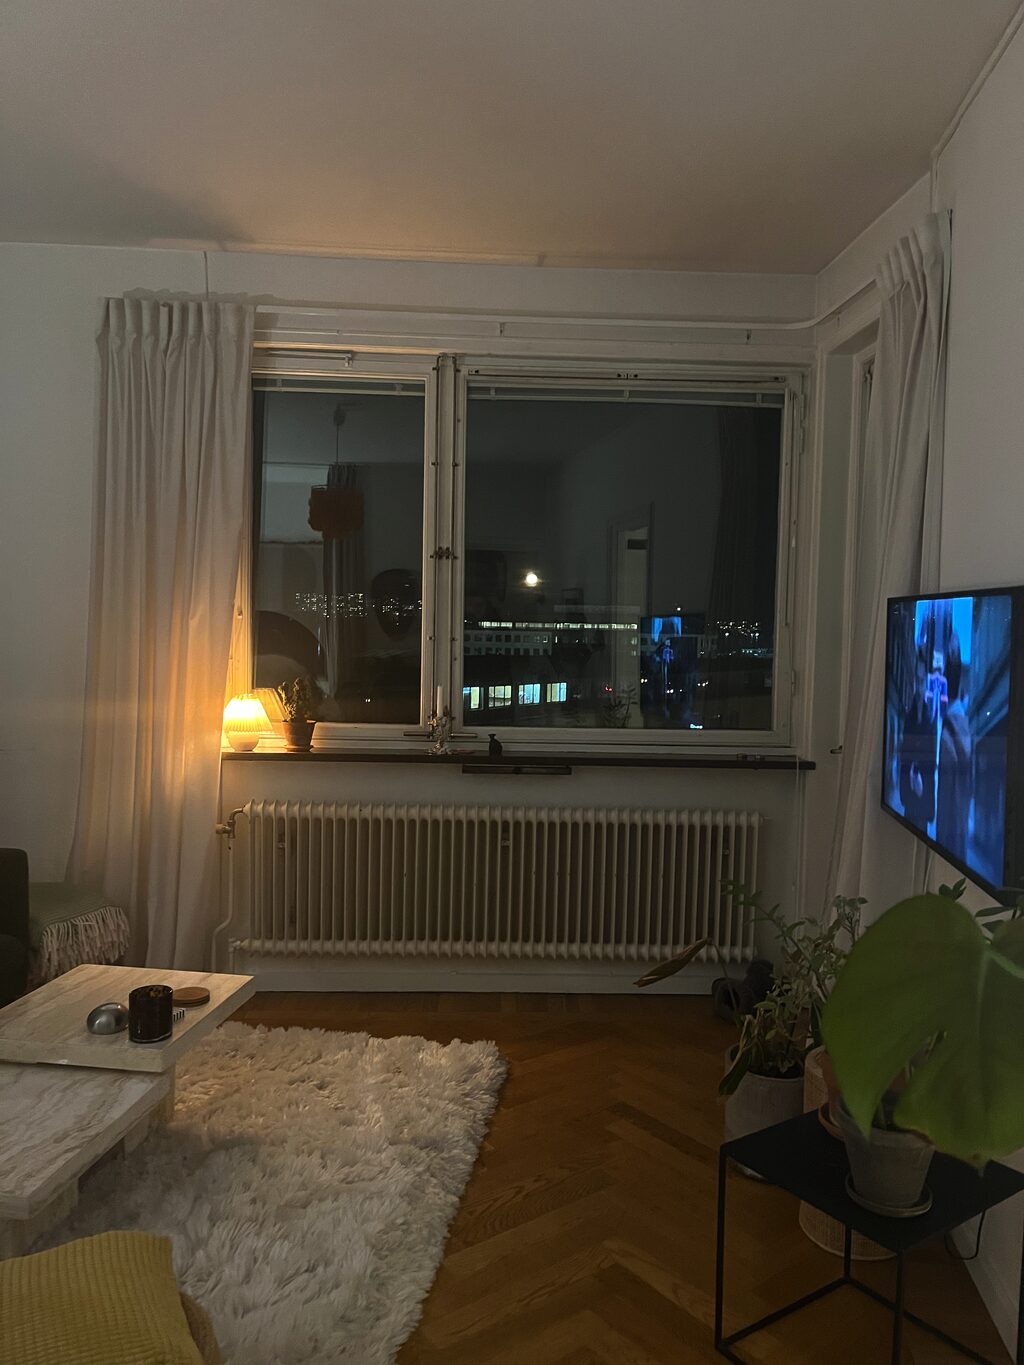 Lägenhetsbyte - Sandhamnsplan 1, 115 40 Stockholm